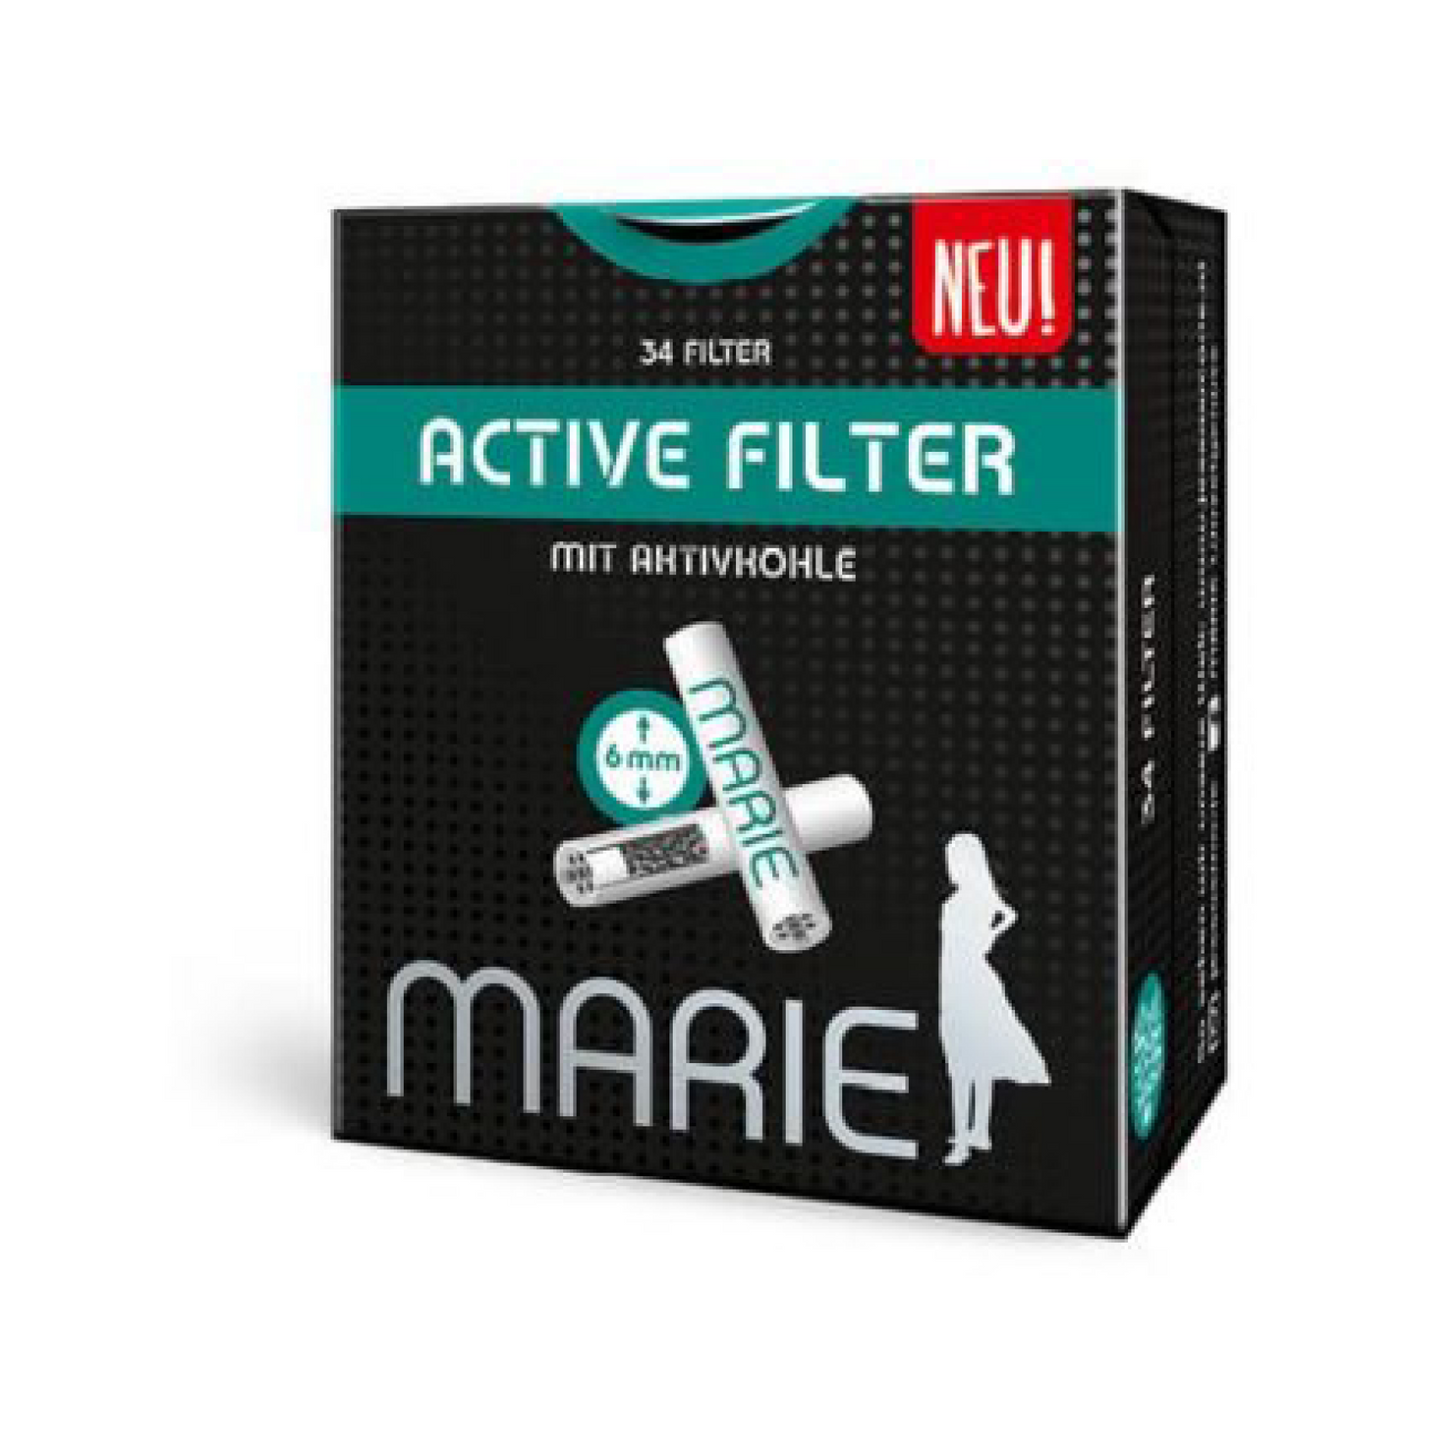 MARIE Aktivkohle Filter